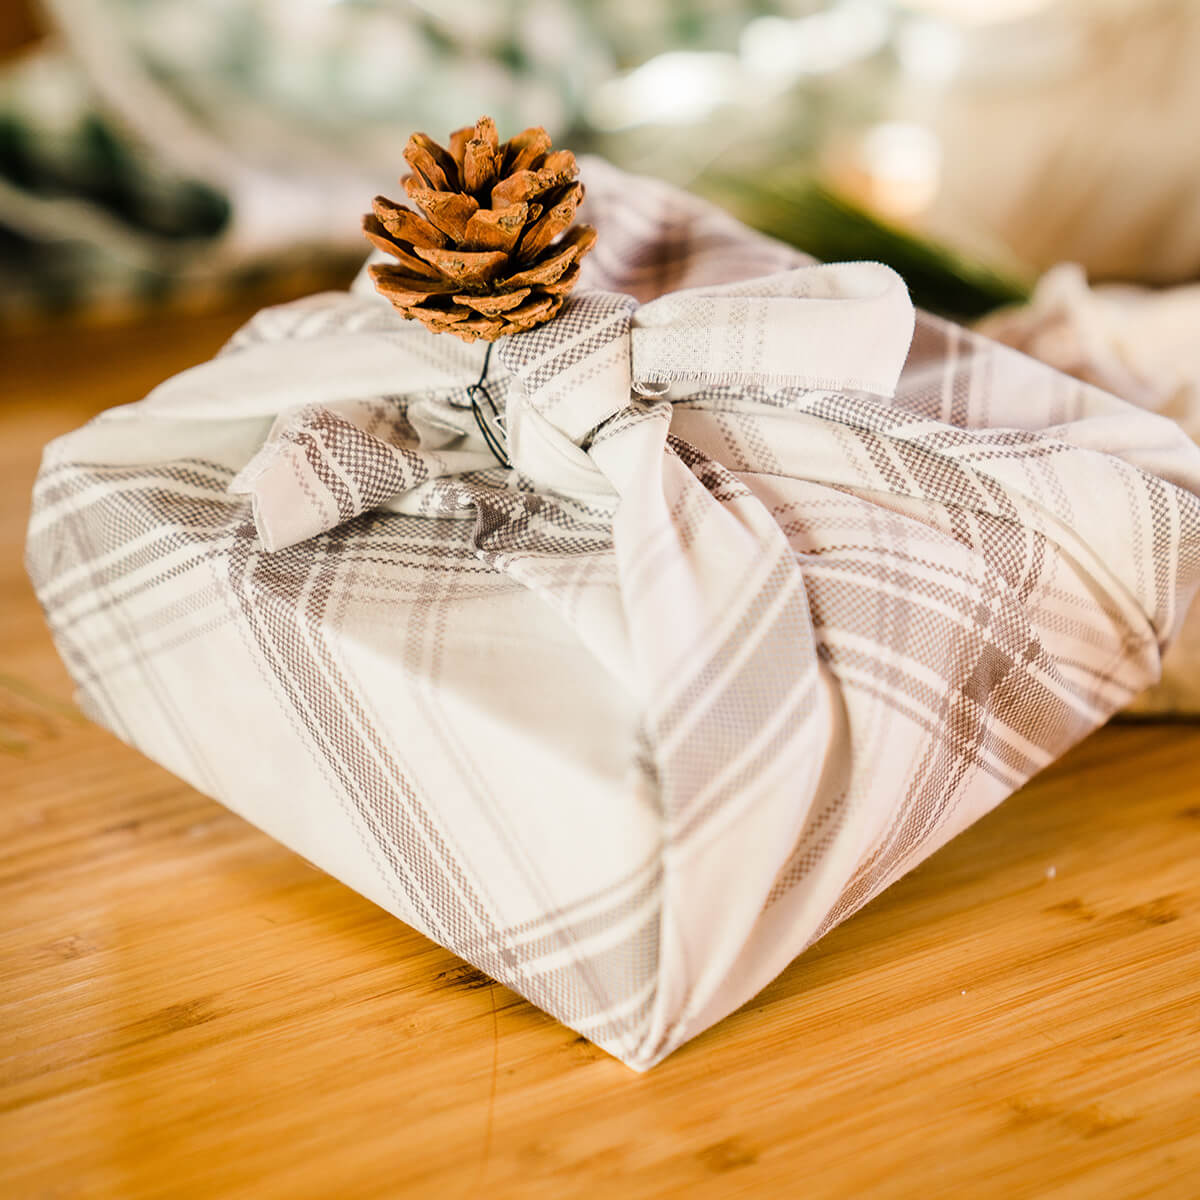 21 Christmas Gift Wrap Ideas eBook